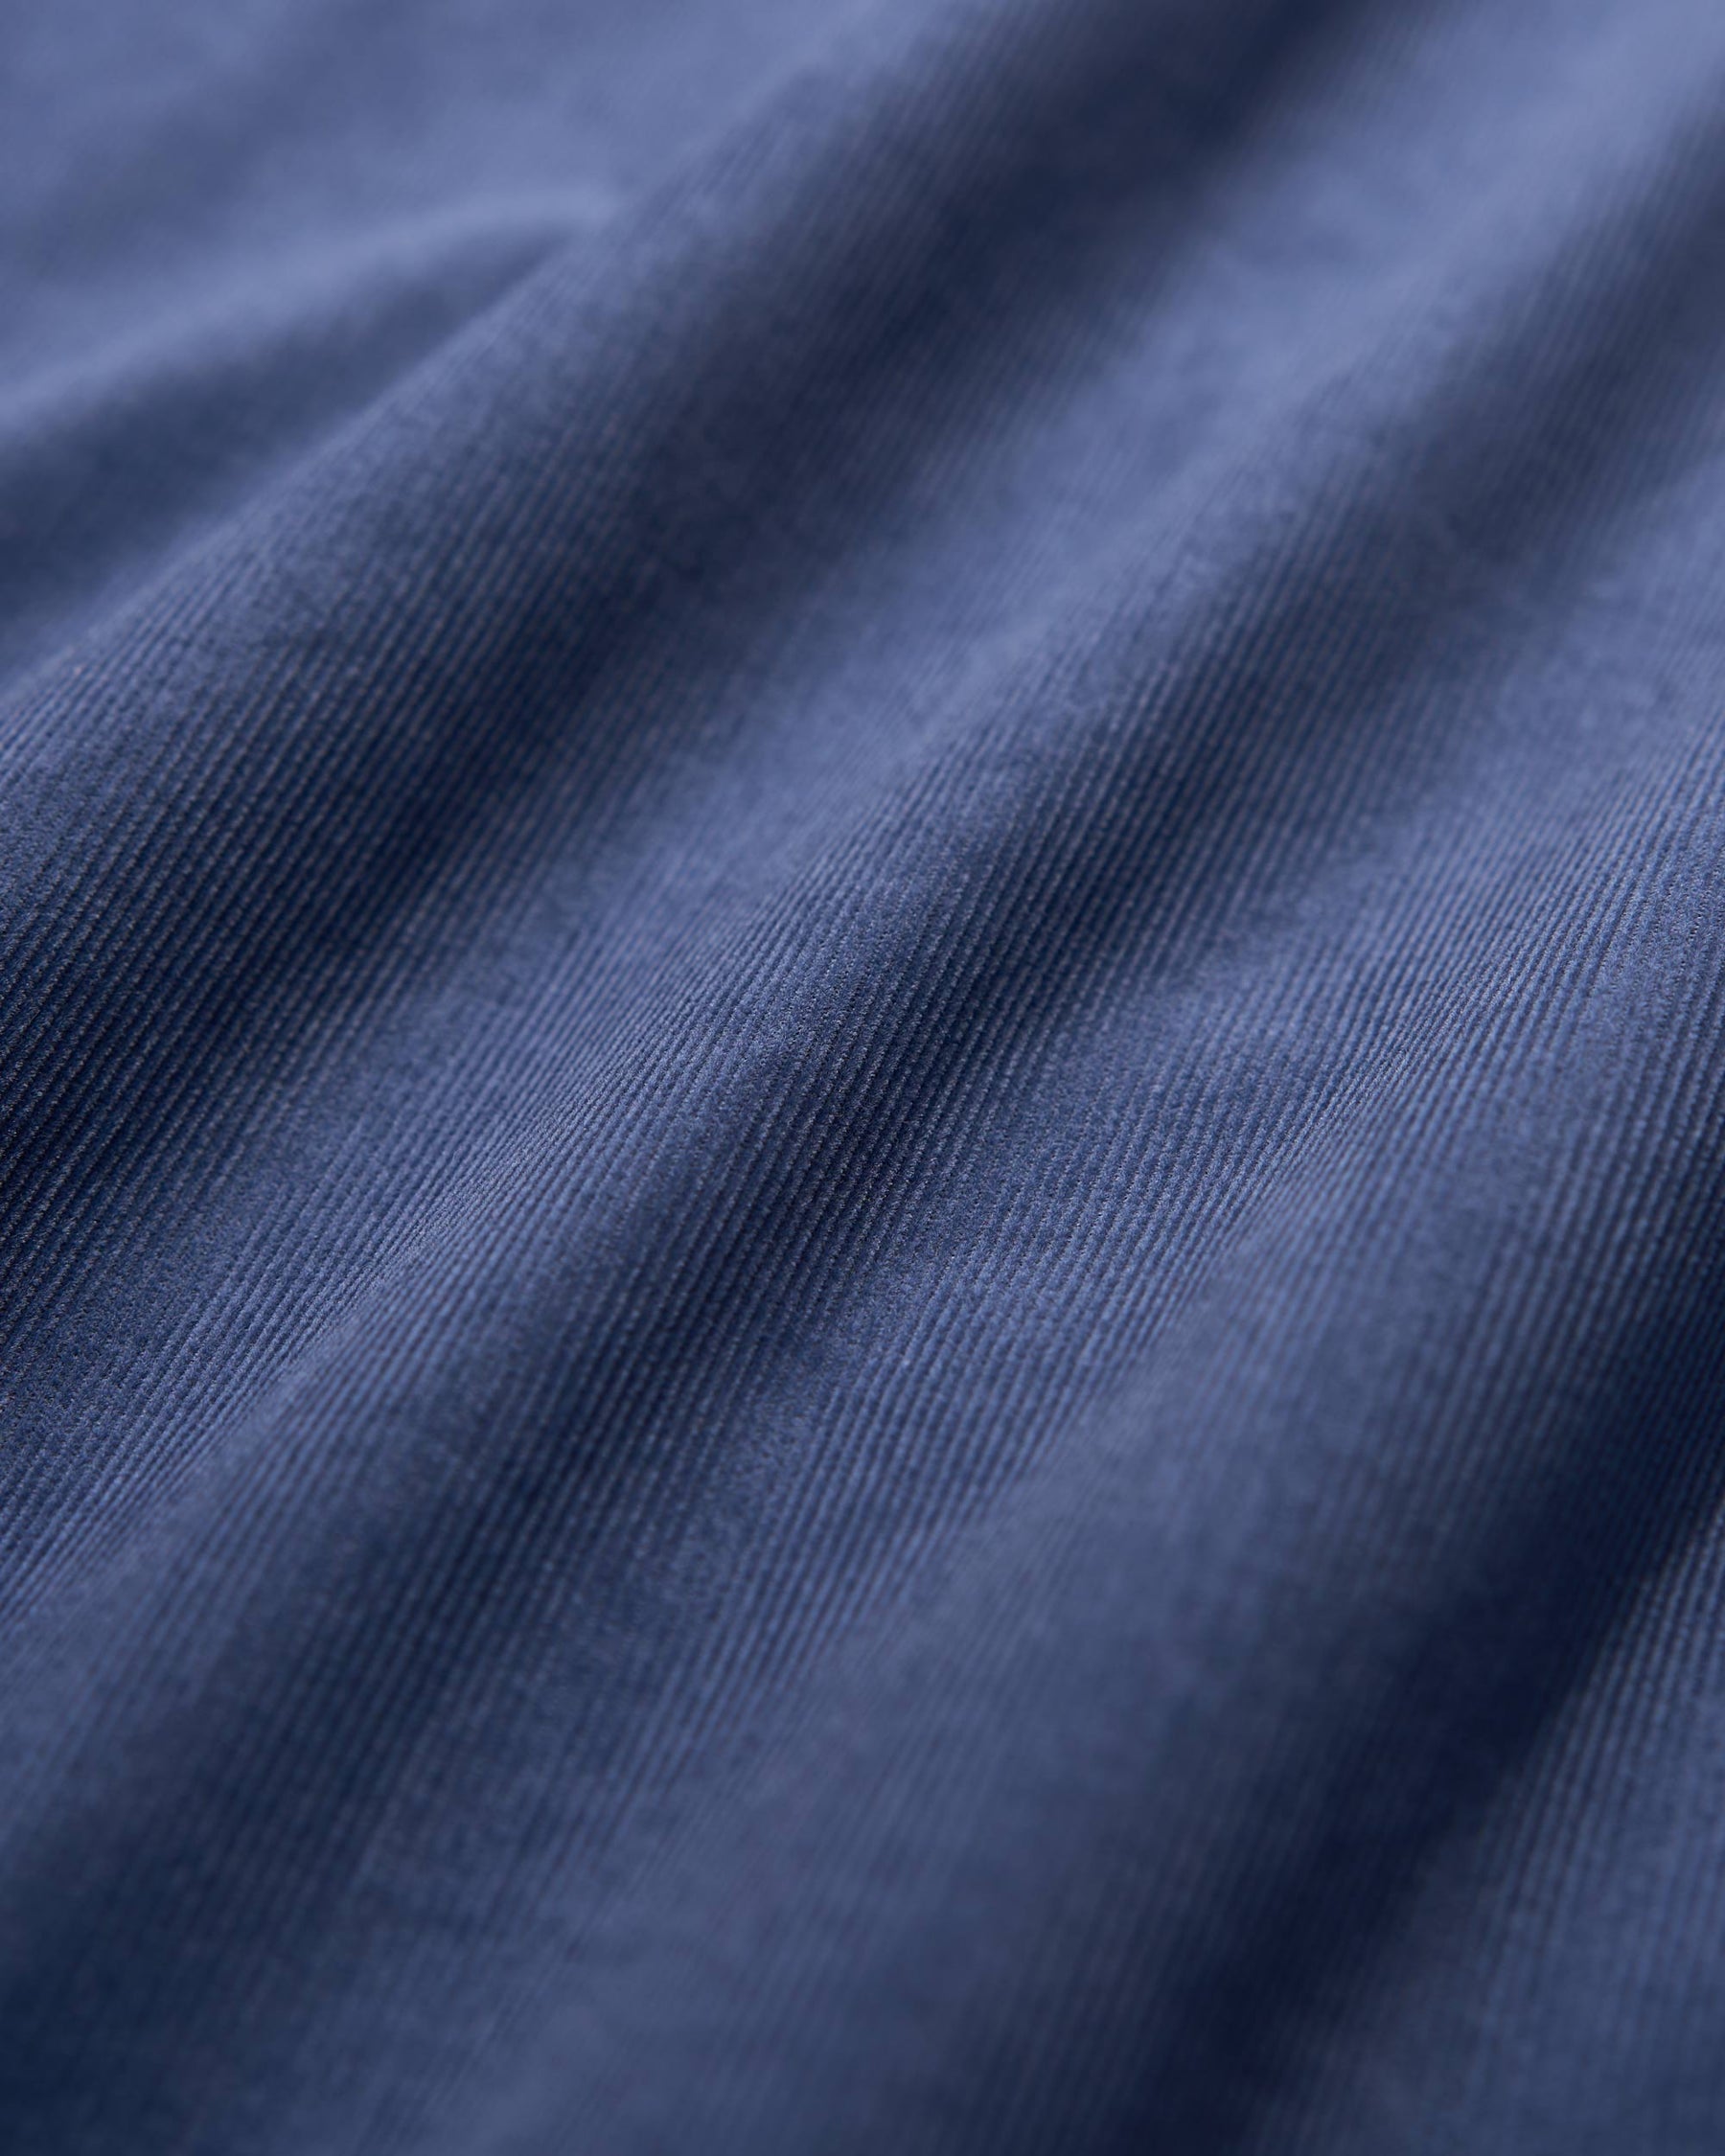 Atom Cord Shirt - Blue